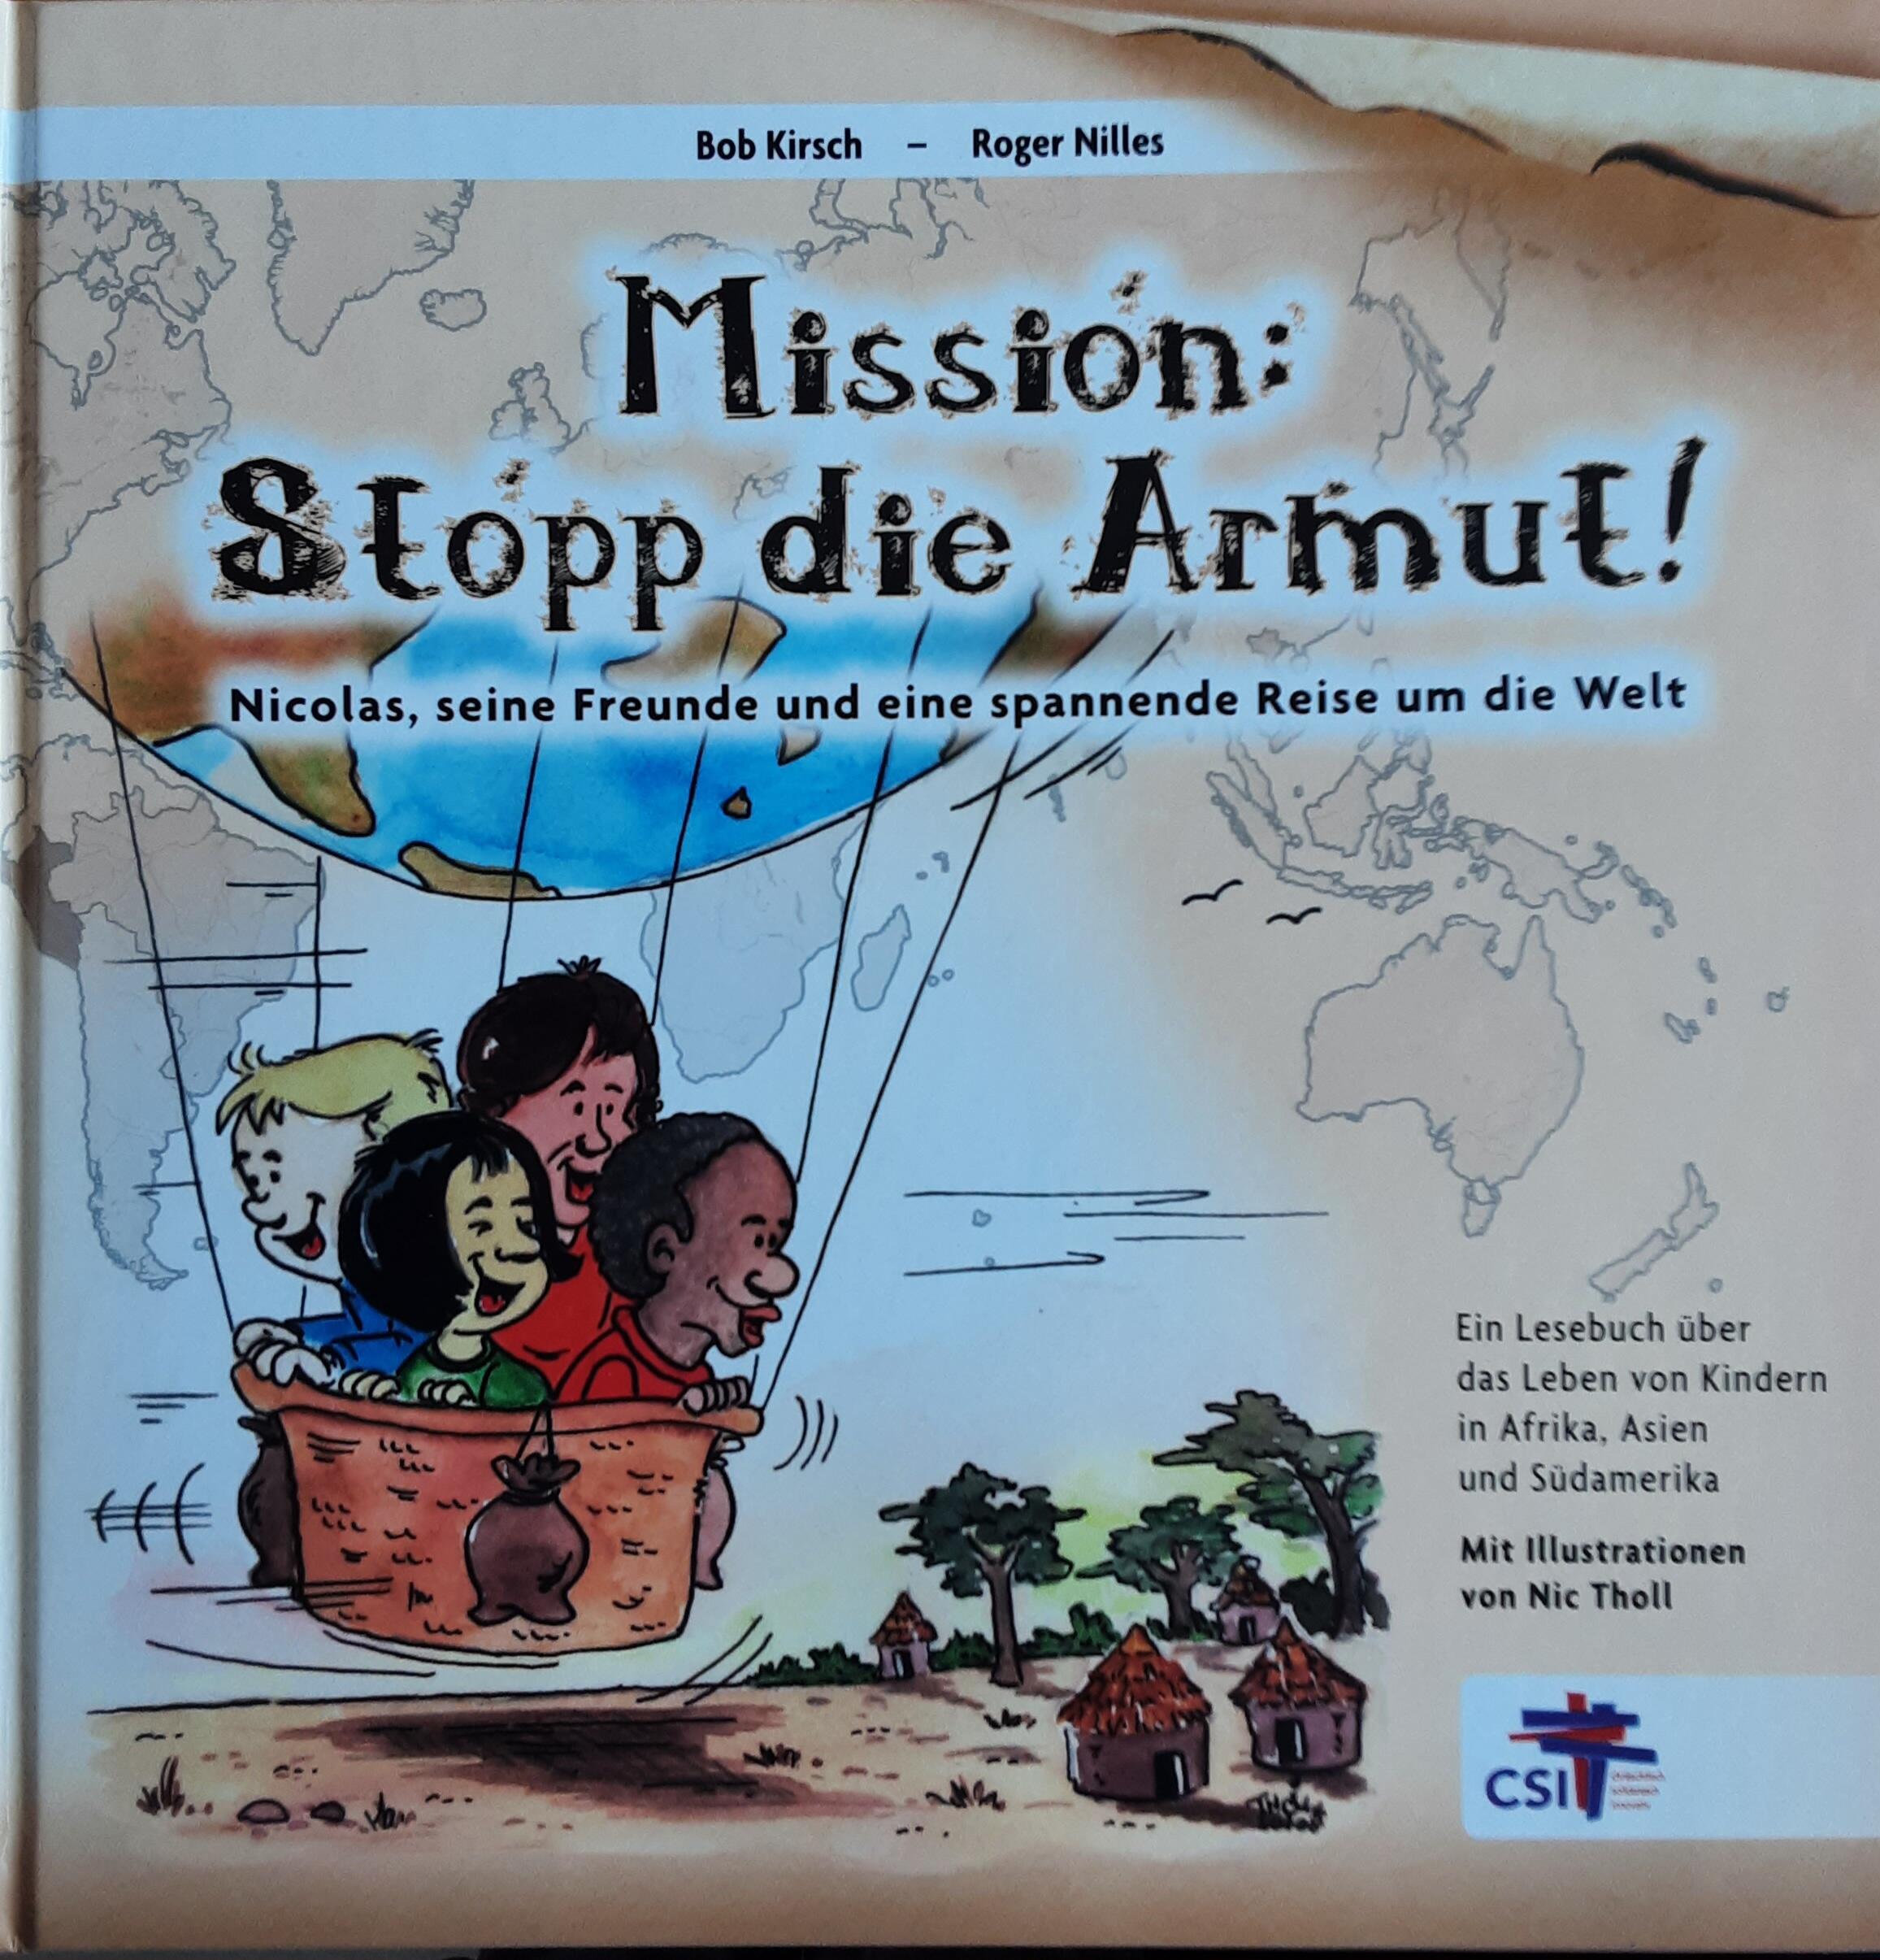 Bob Kirsch-Roger Nilles : Mission : stop die Armut